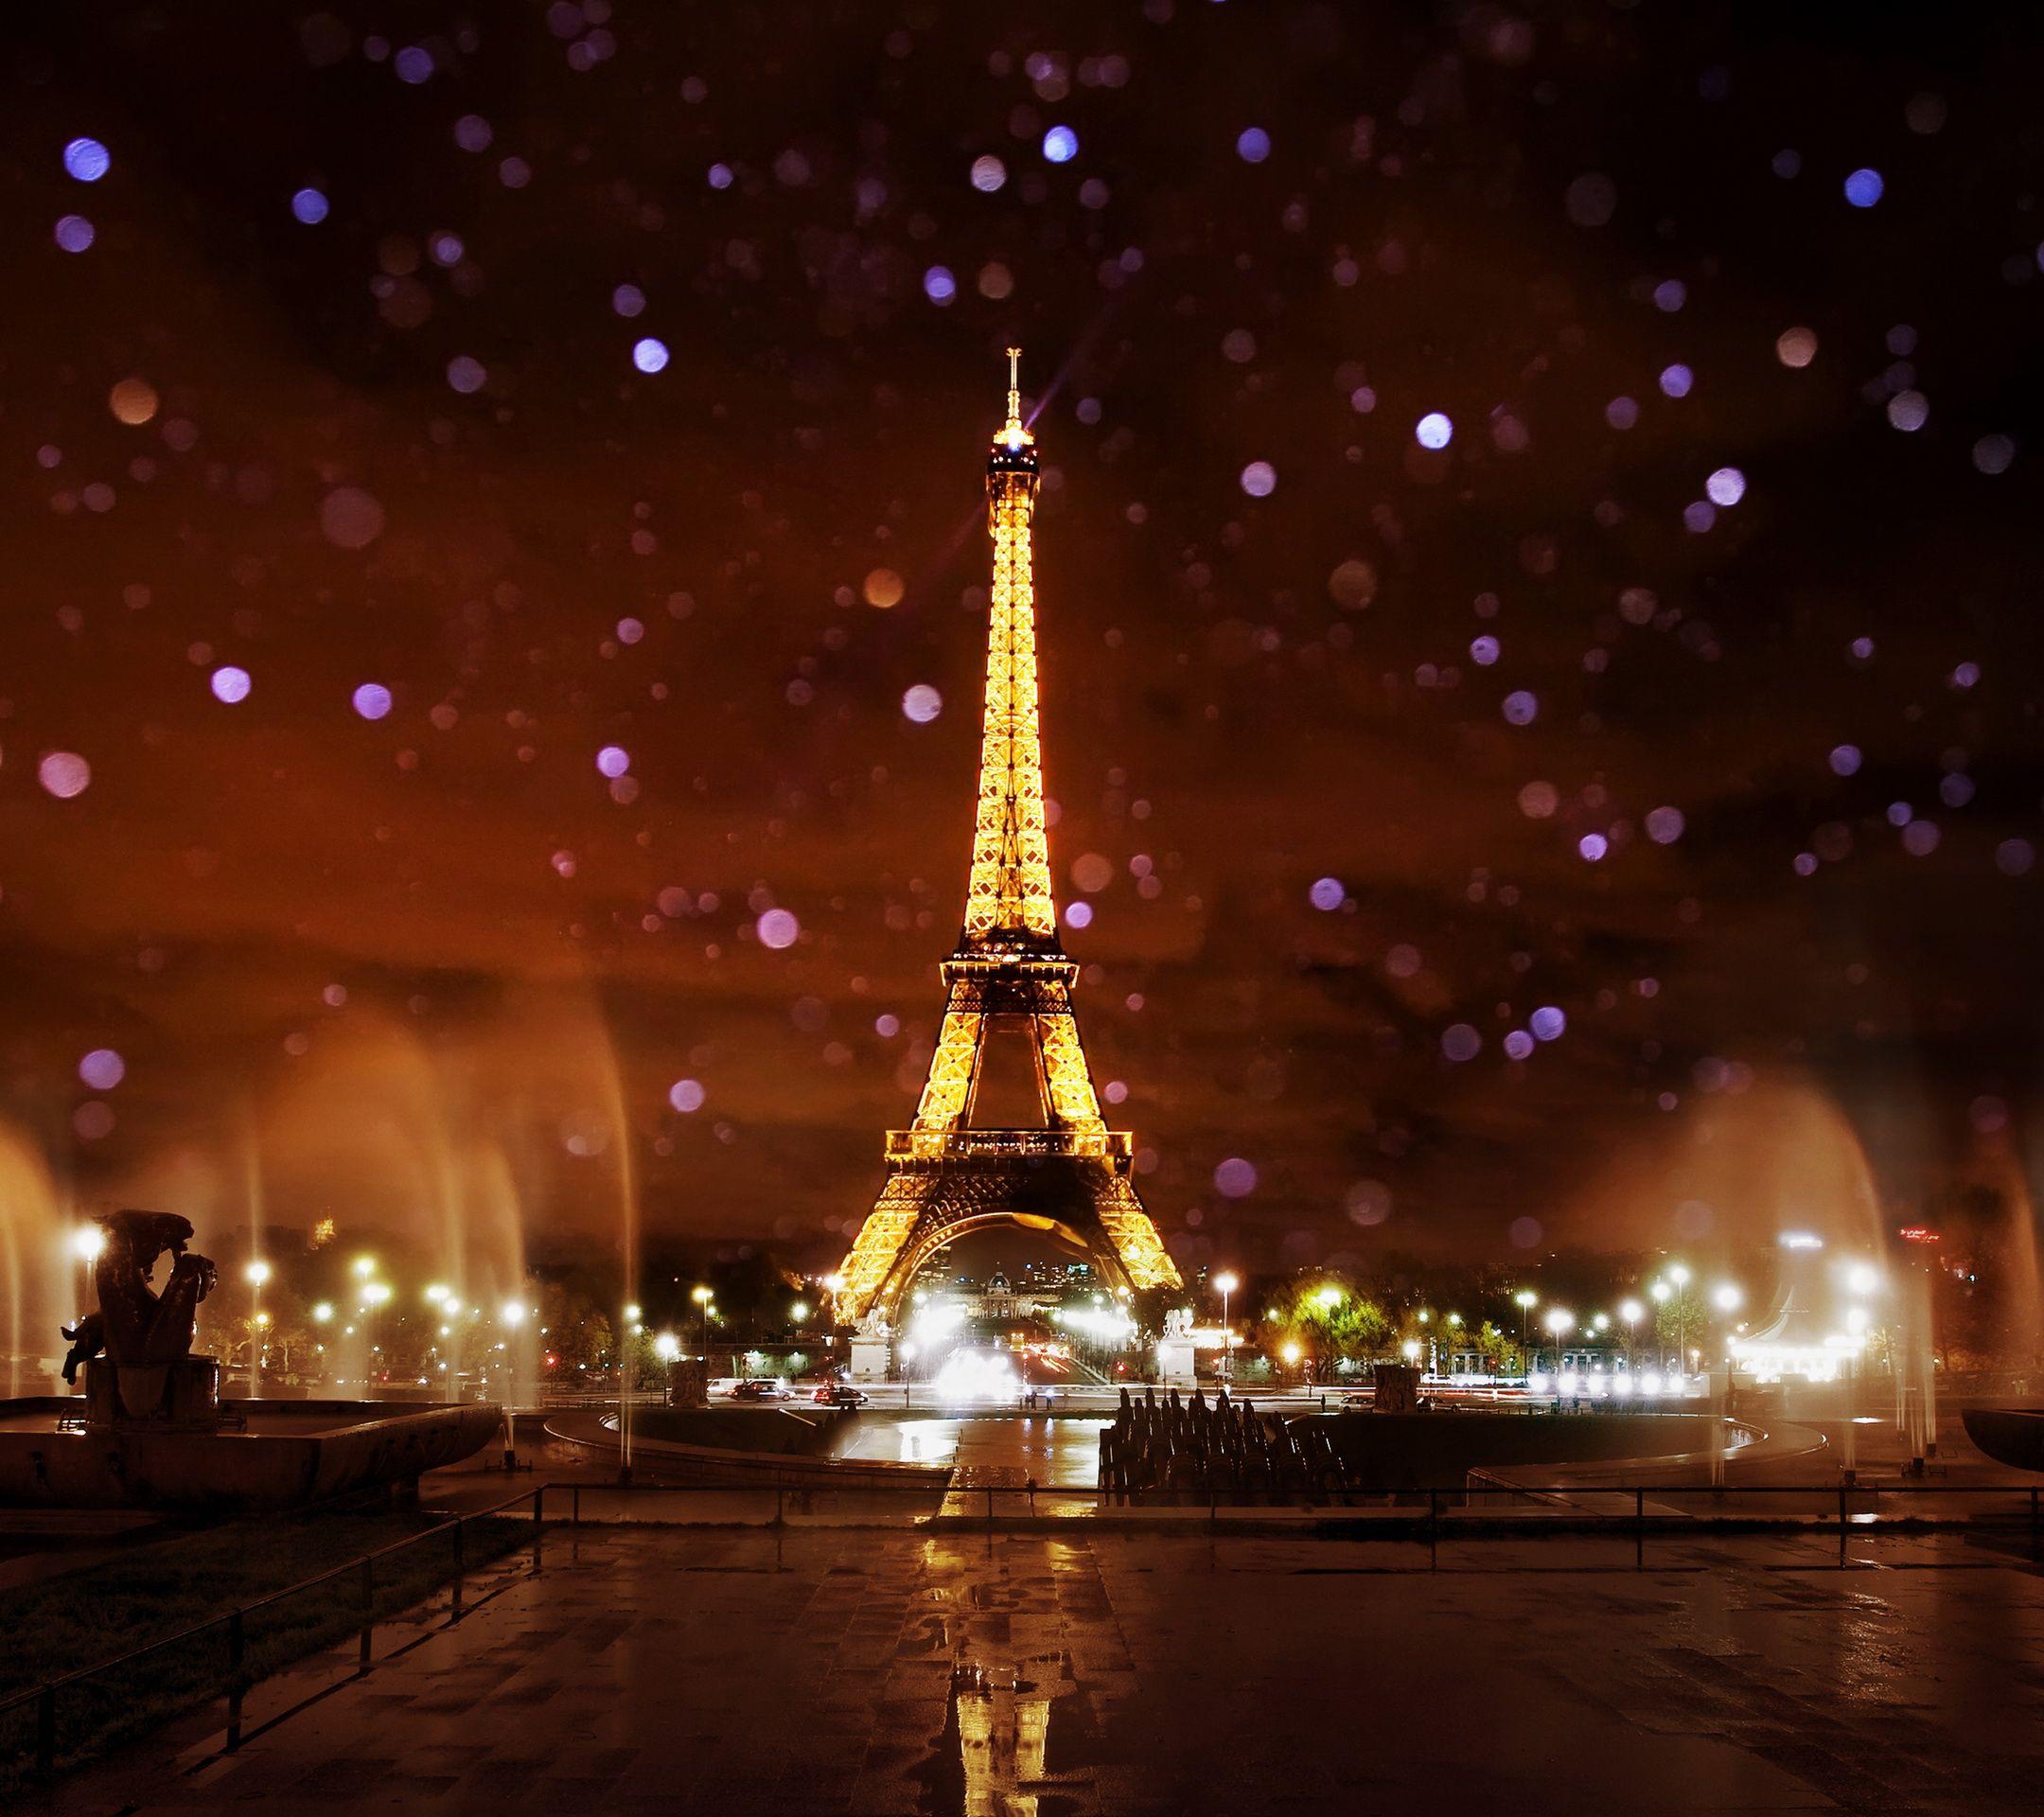 Paris by night 2160 x 1920 Wallpaper night paris lights